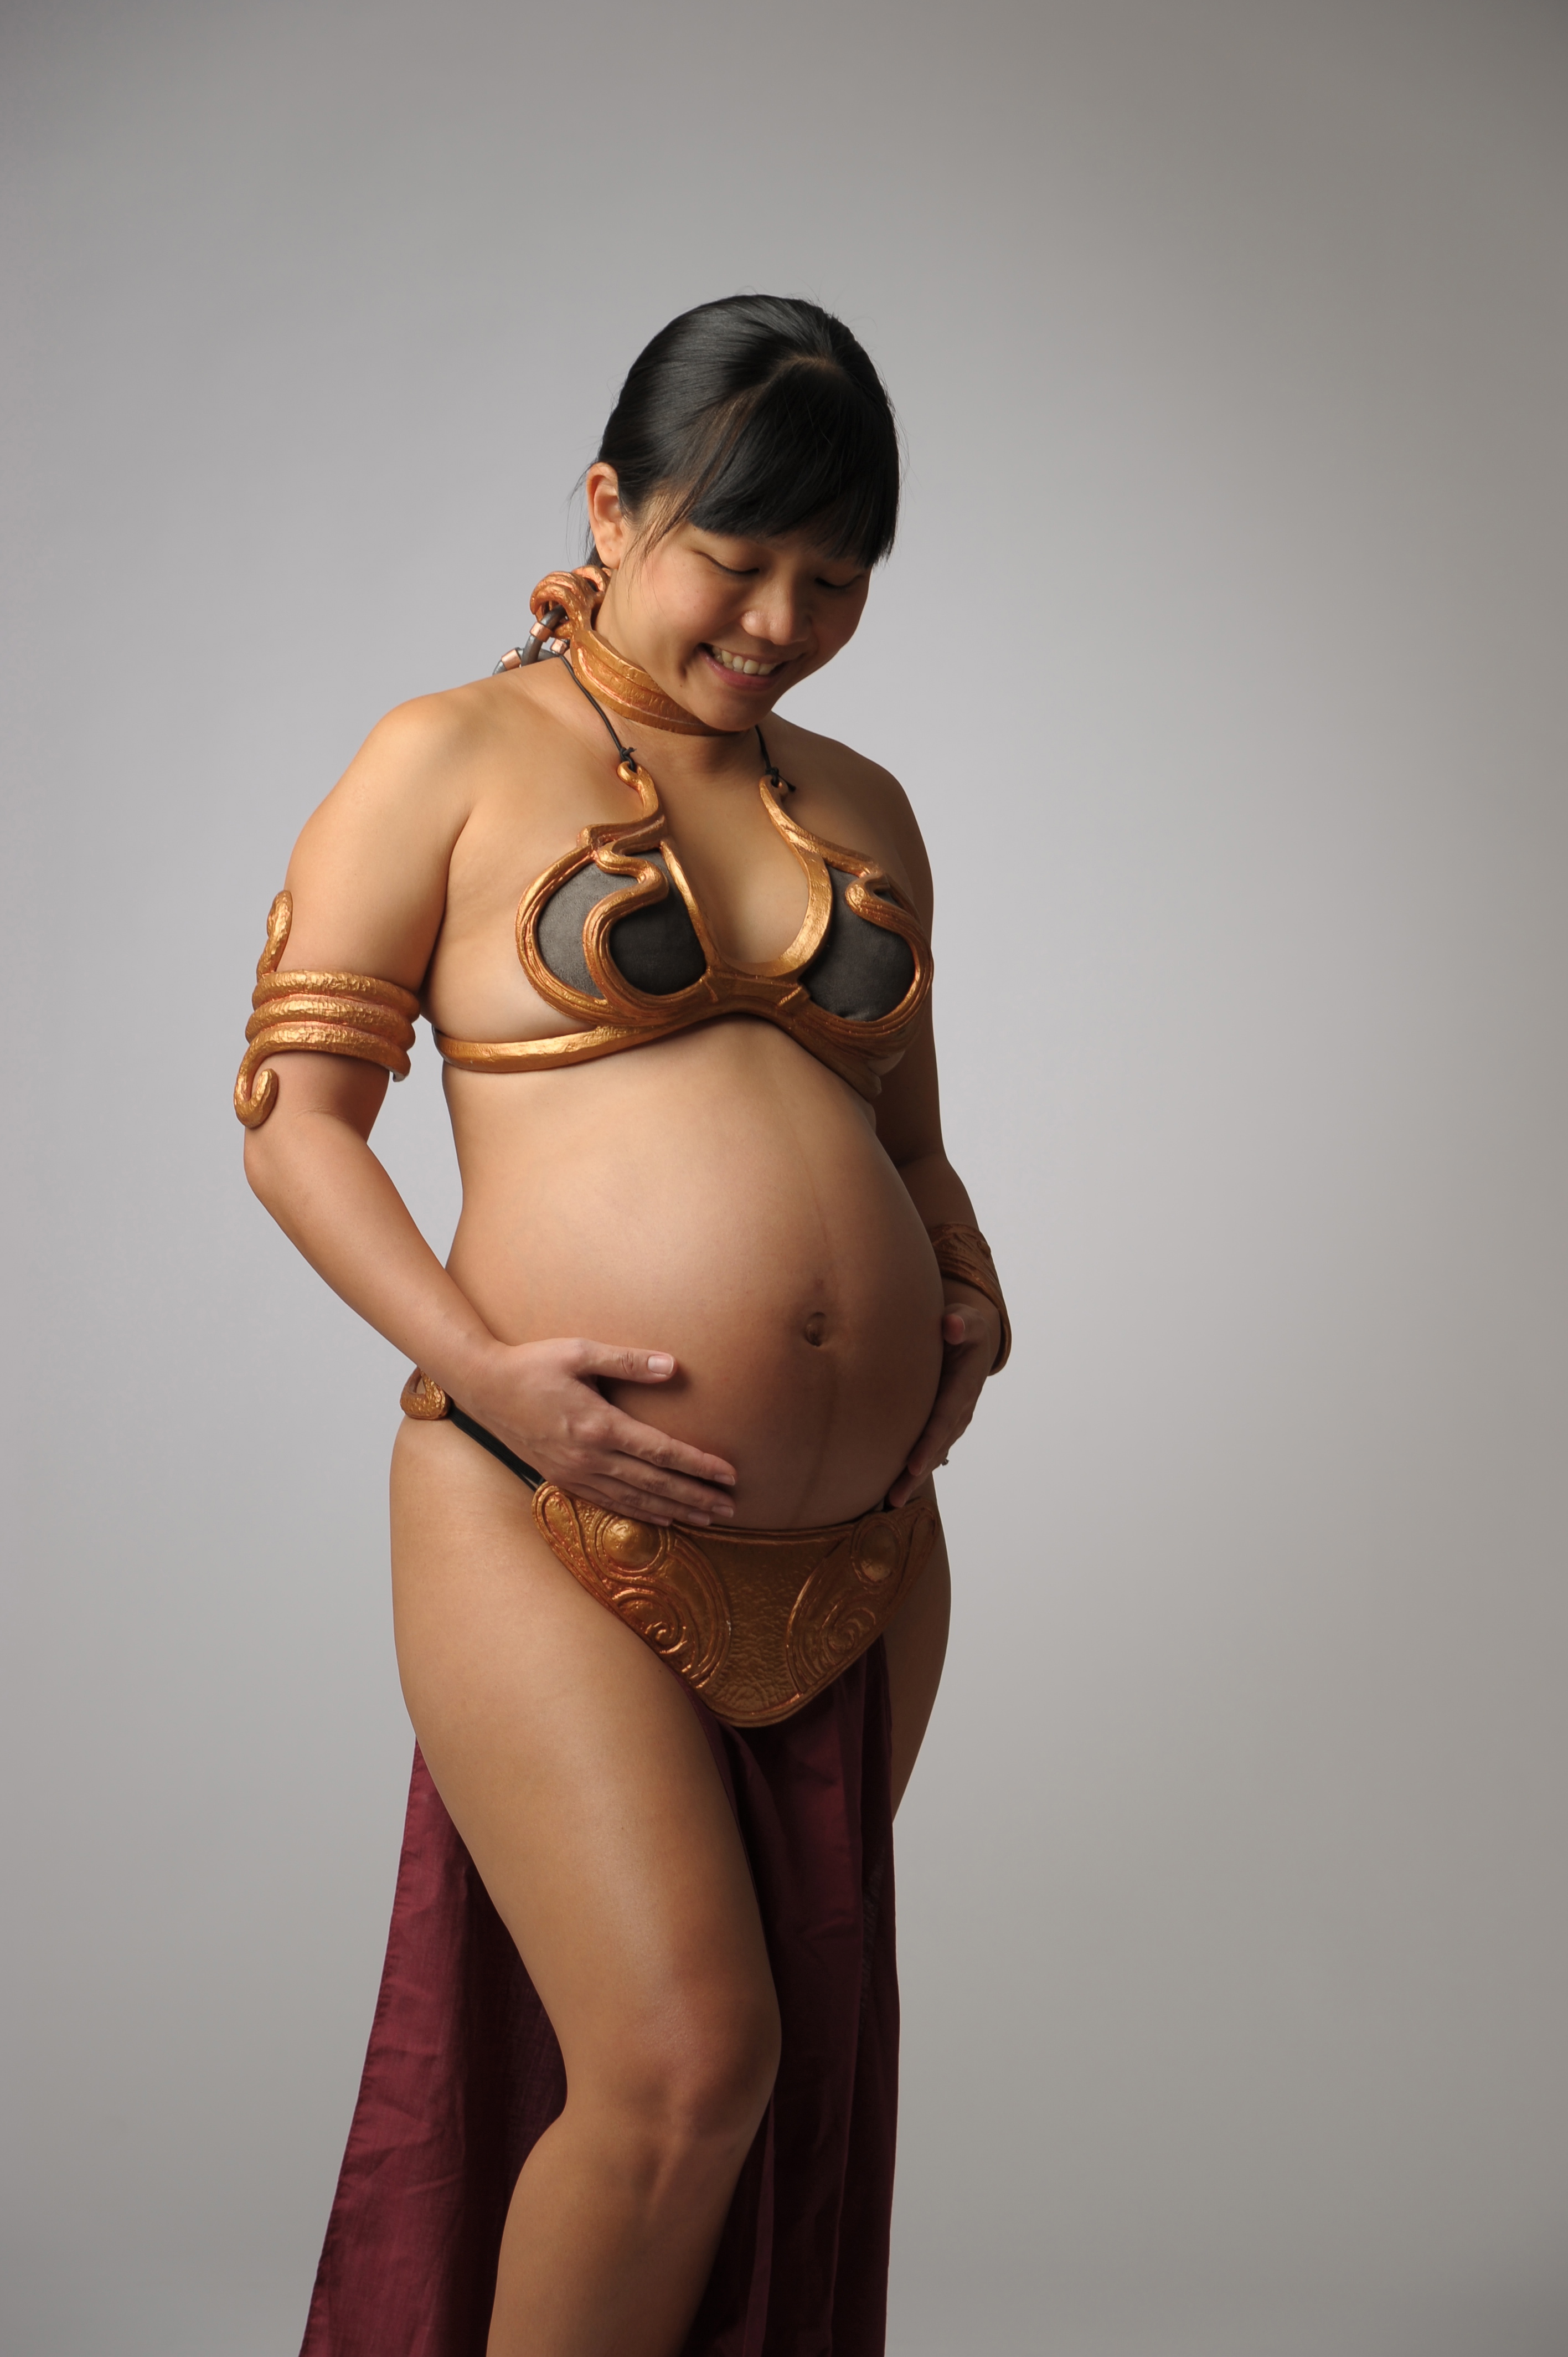 aya germanos add pregnant slave princess leia photo